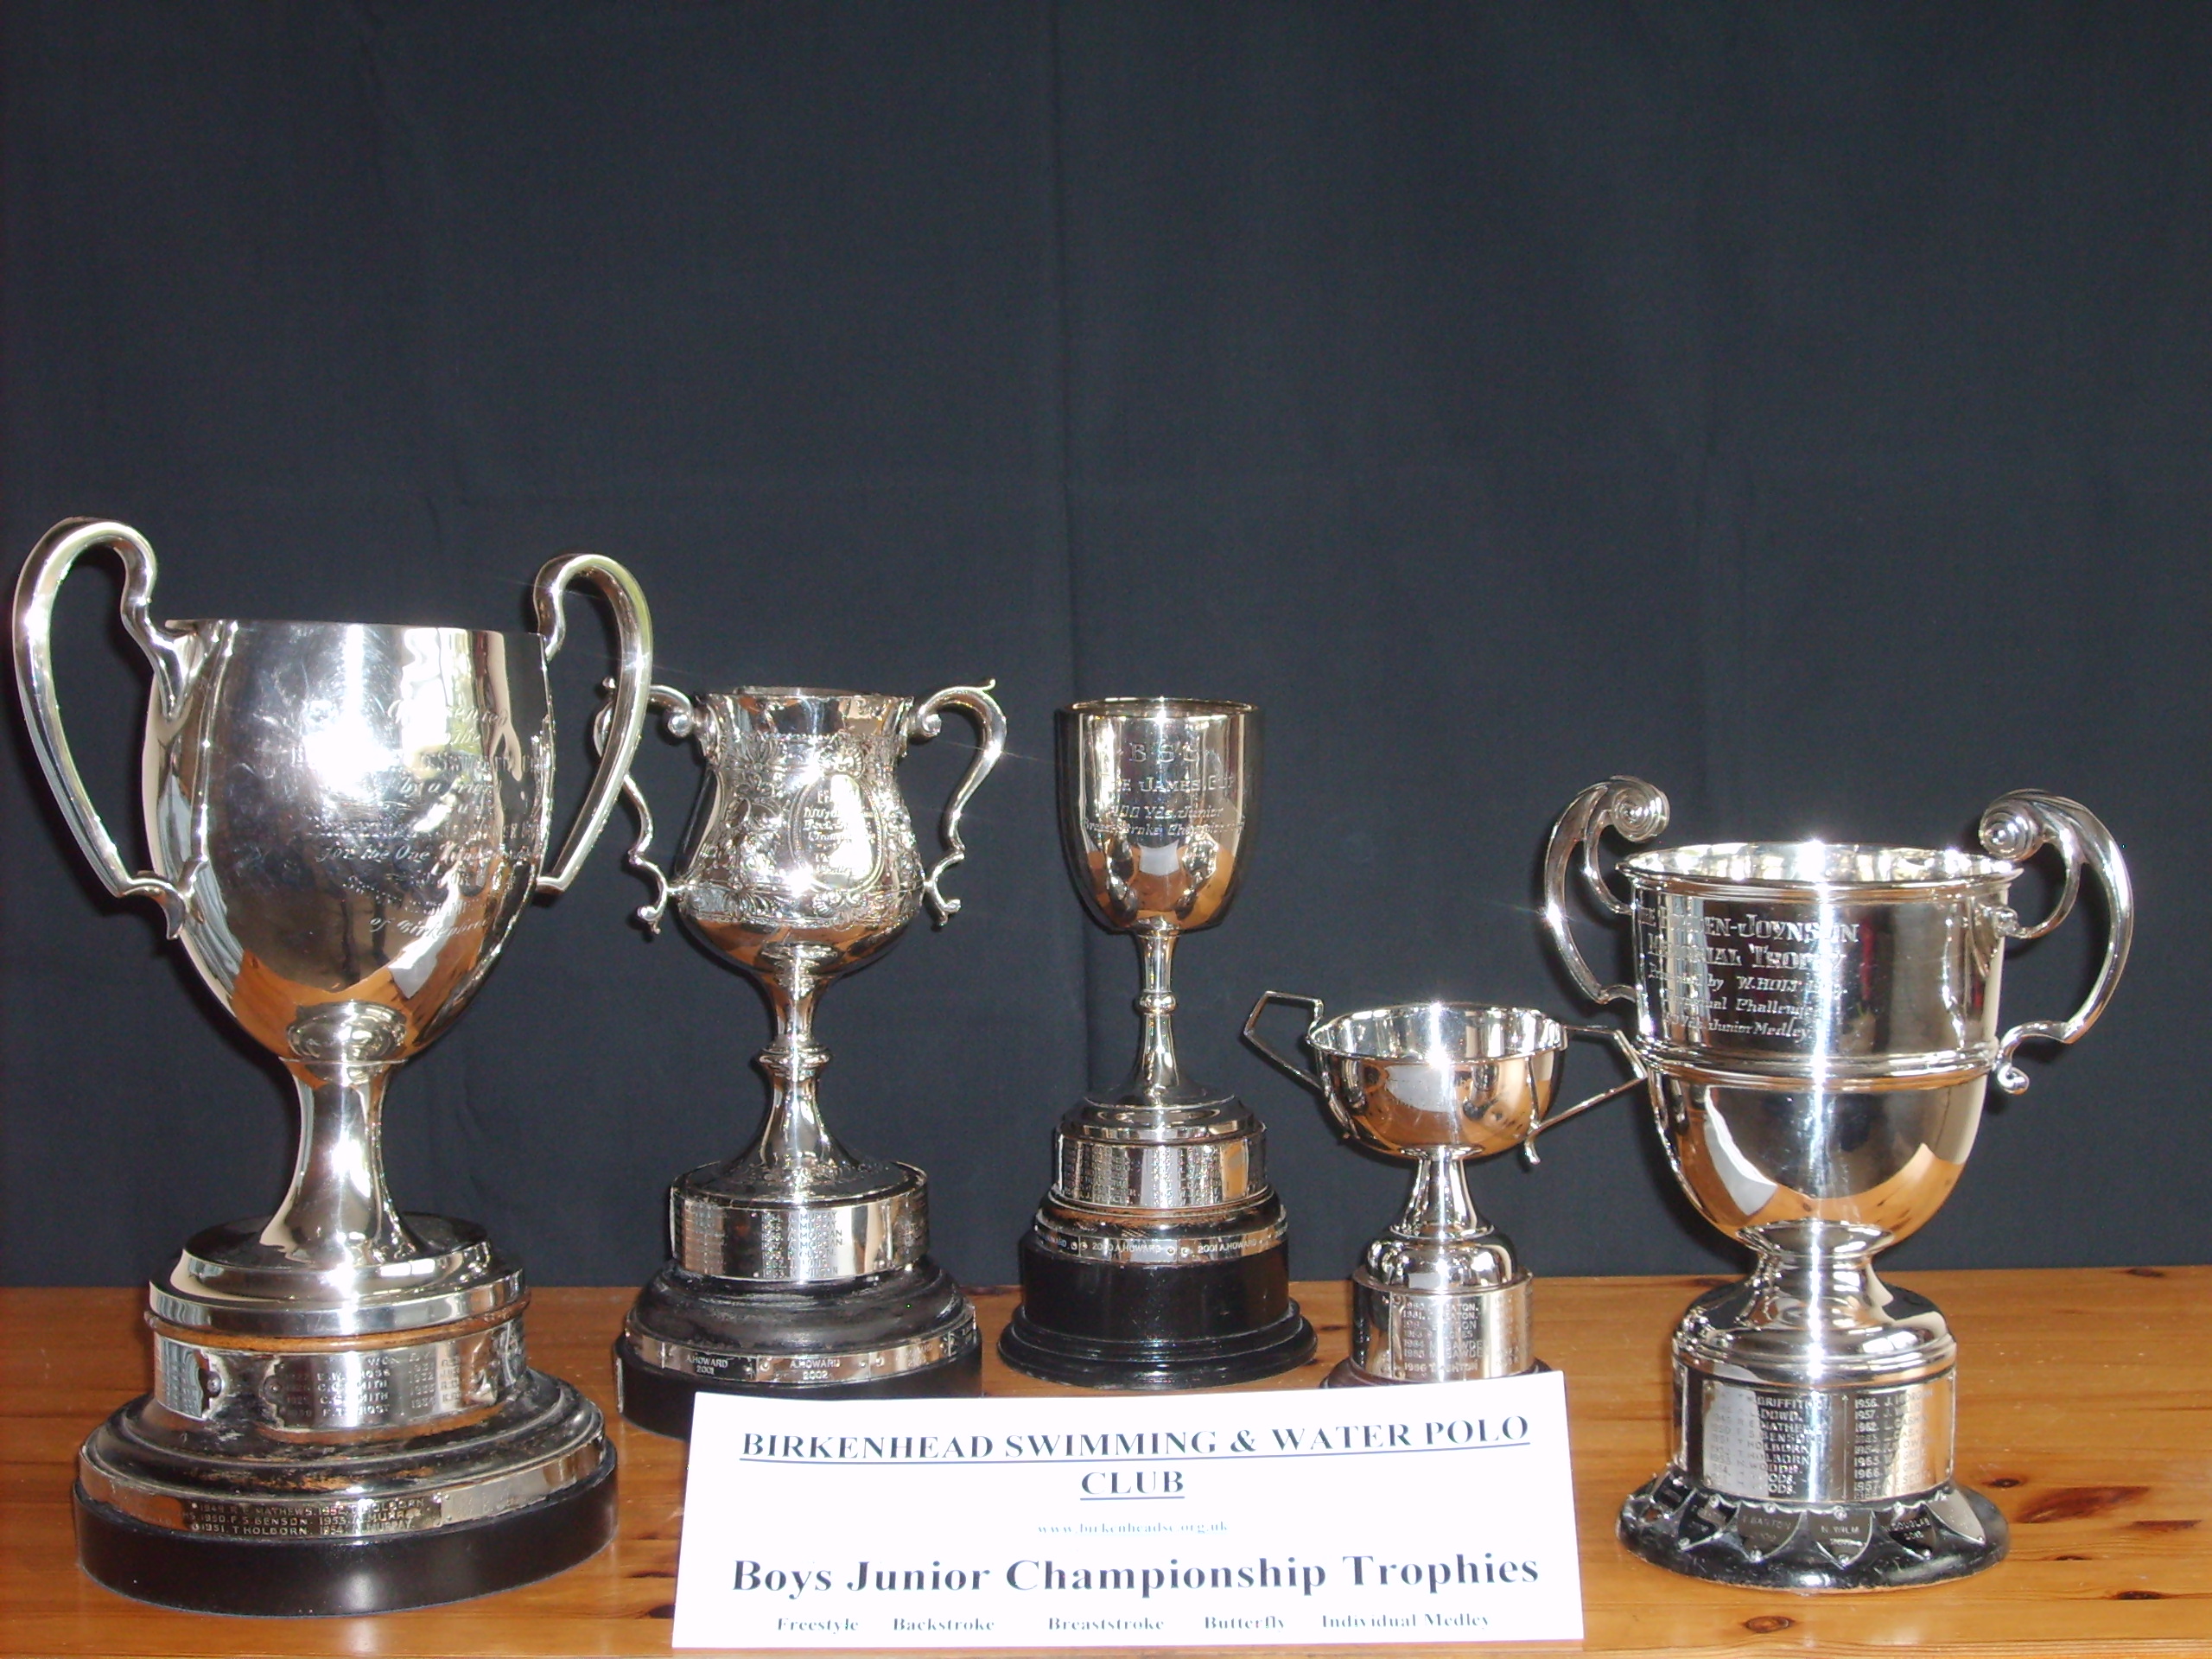 Boys Junior Championship Trophies